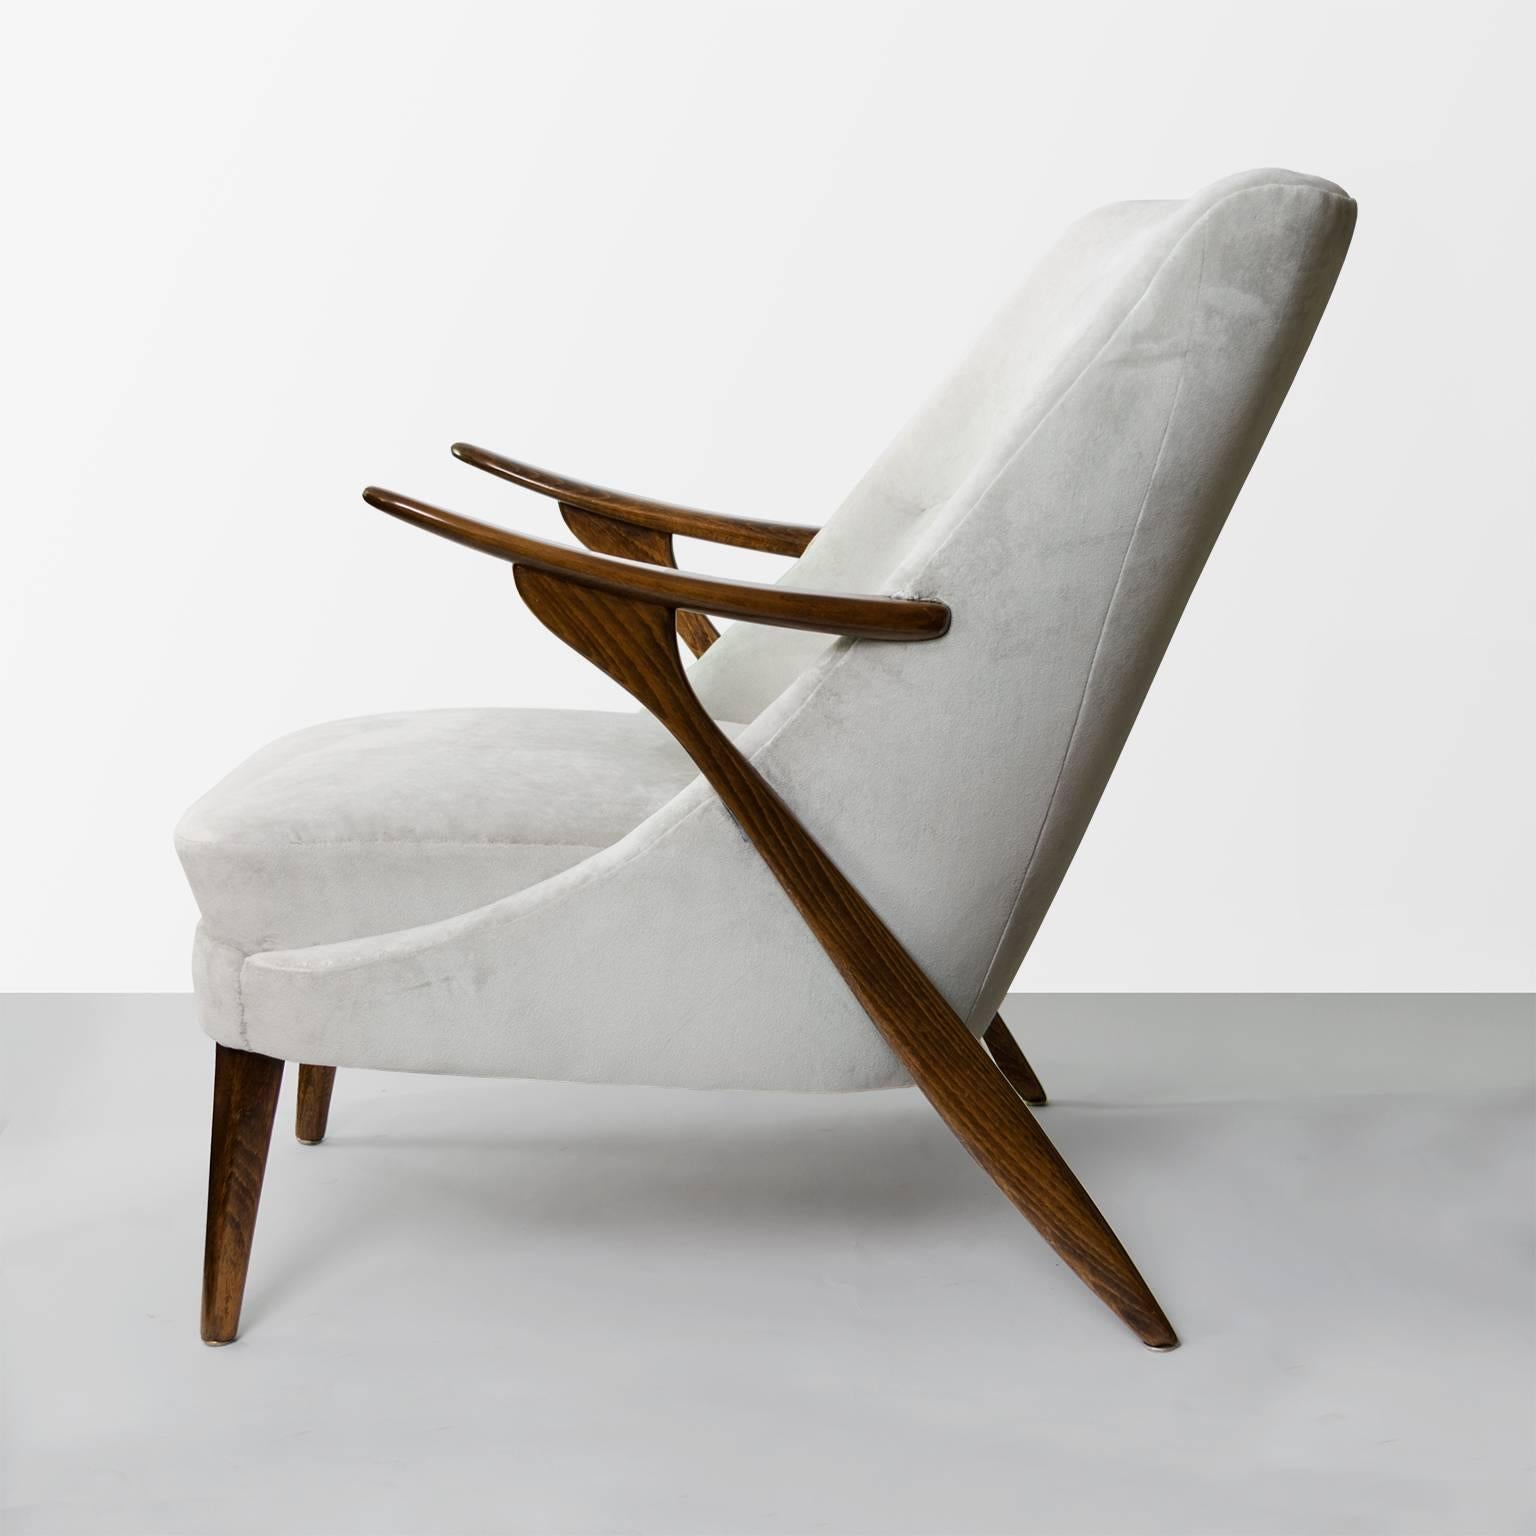 Elm Scandinavian Modern Chairs by Svante Skogh